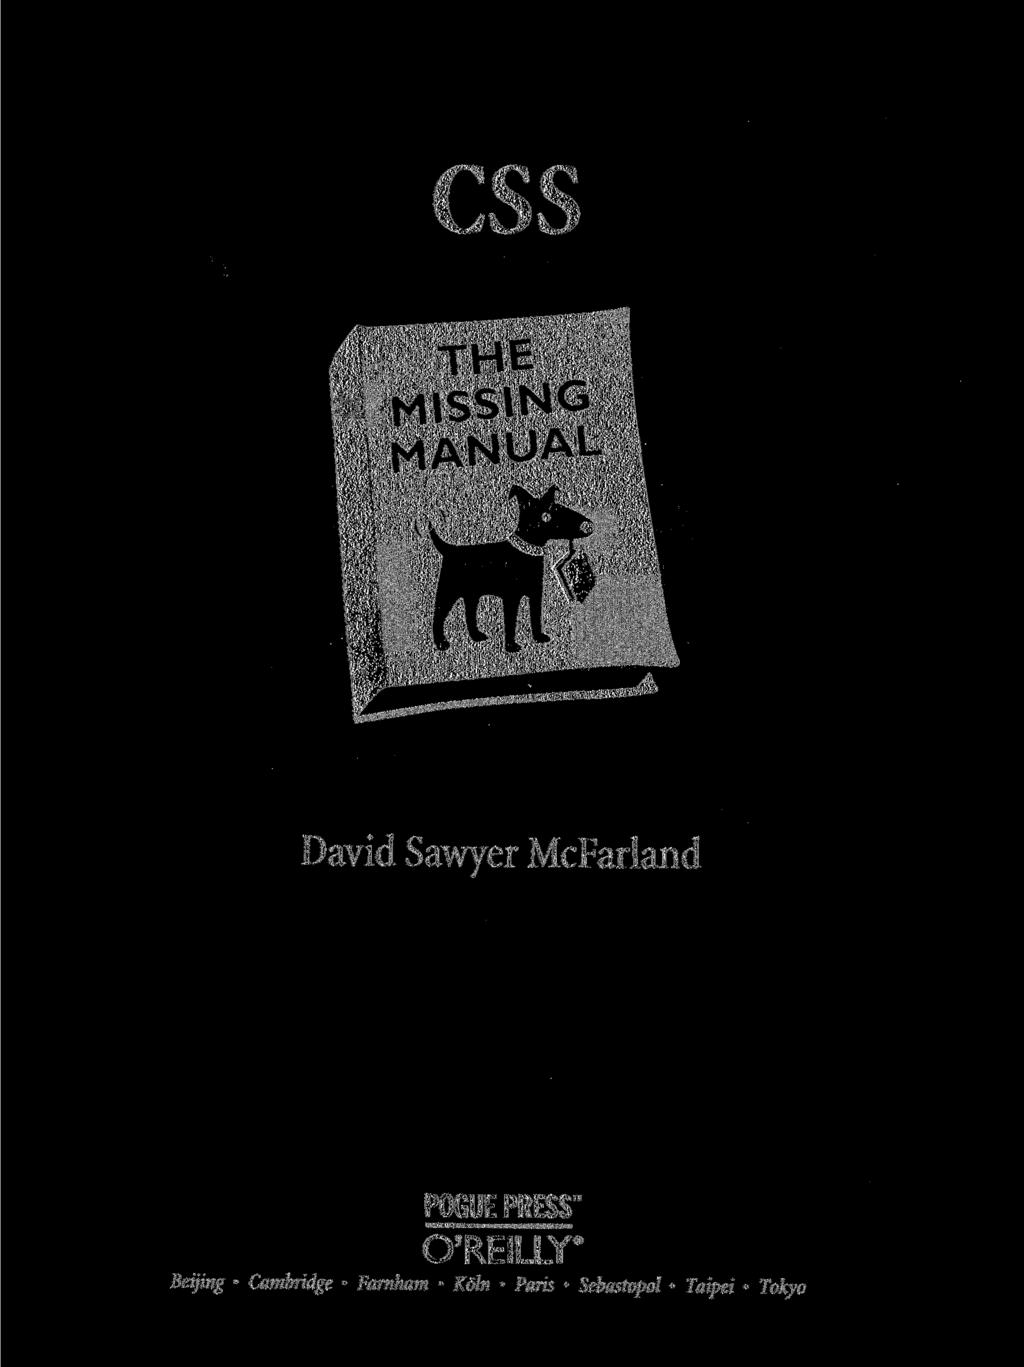 CSS THE M\SS1NG MANUAL David Sawyer McFarland POGUE PRESS"